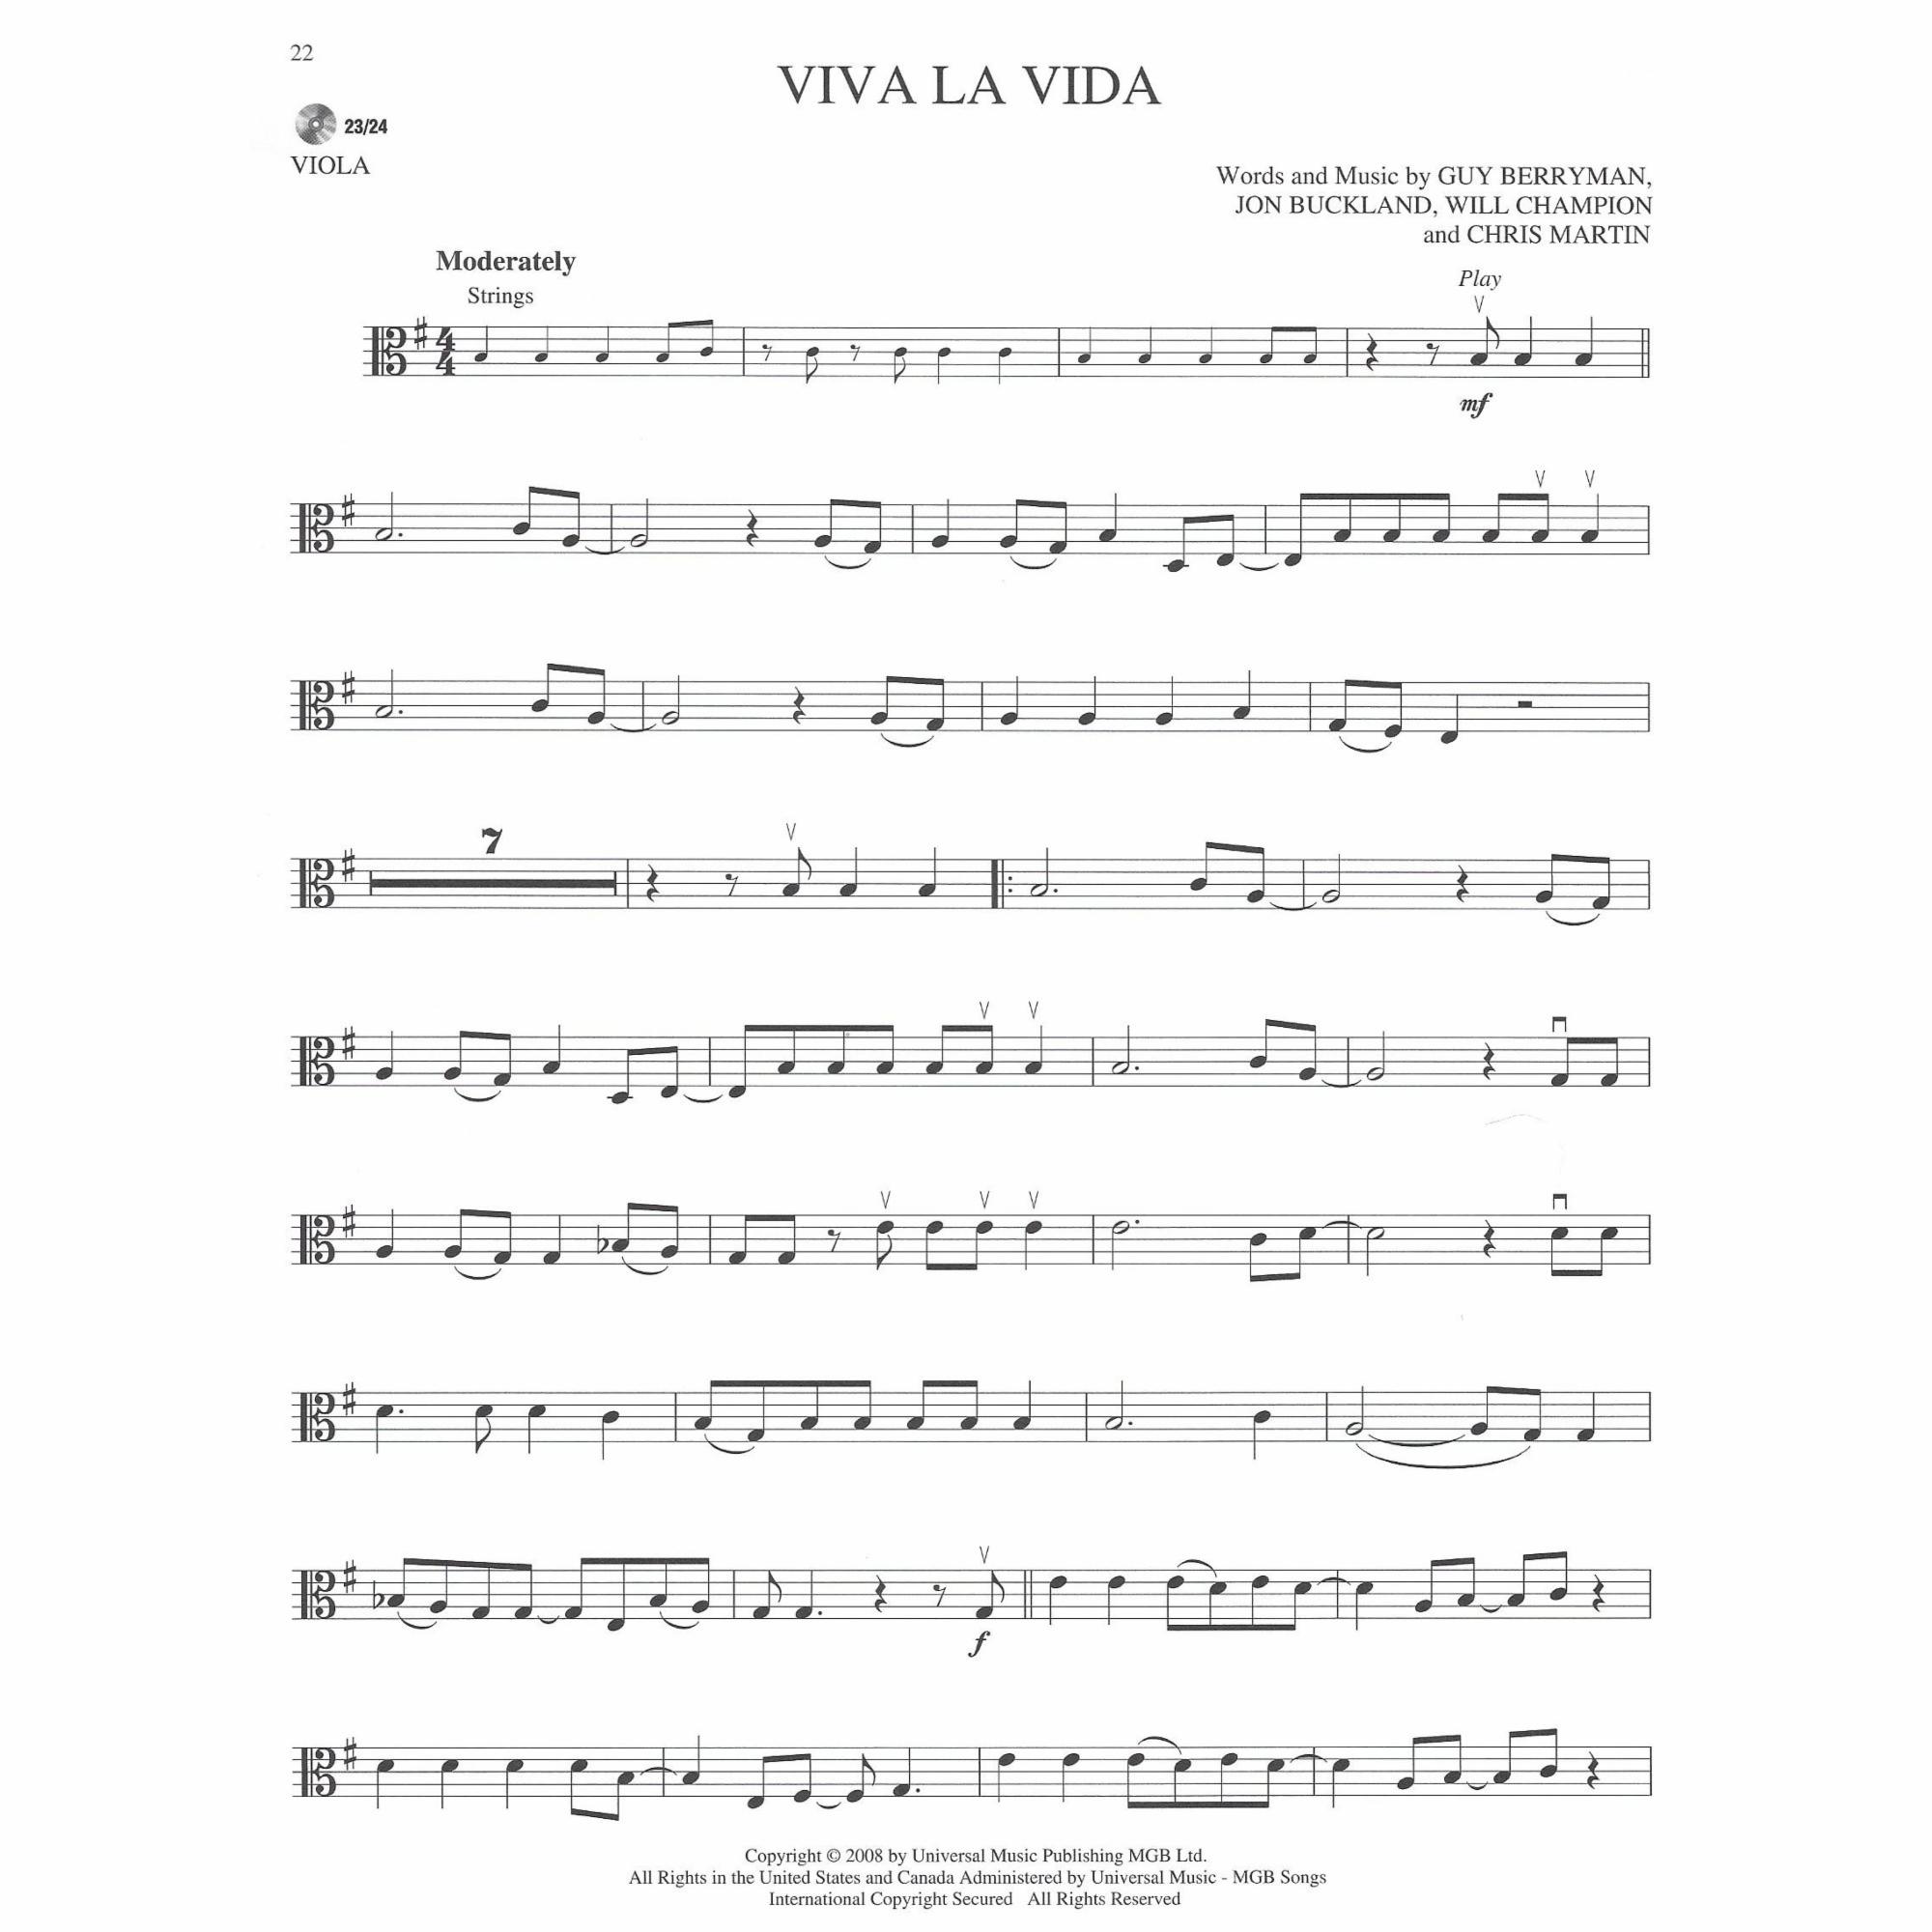 Sample: Viola (Pg. 22)